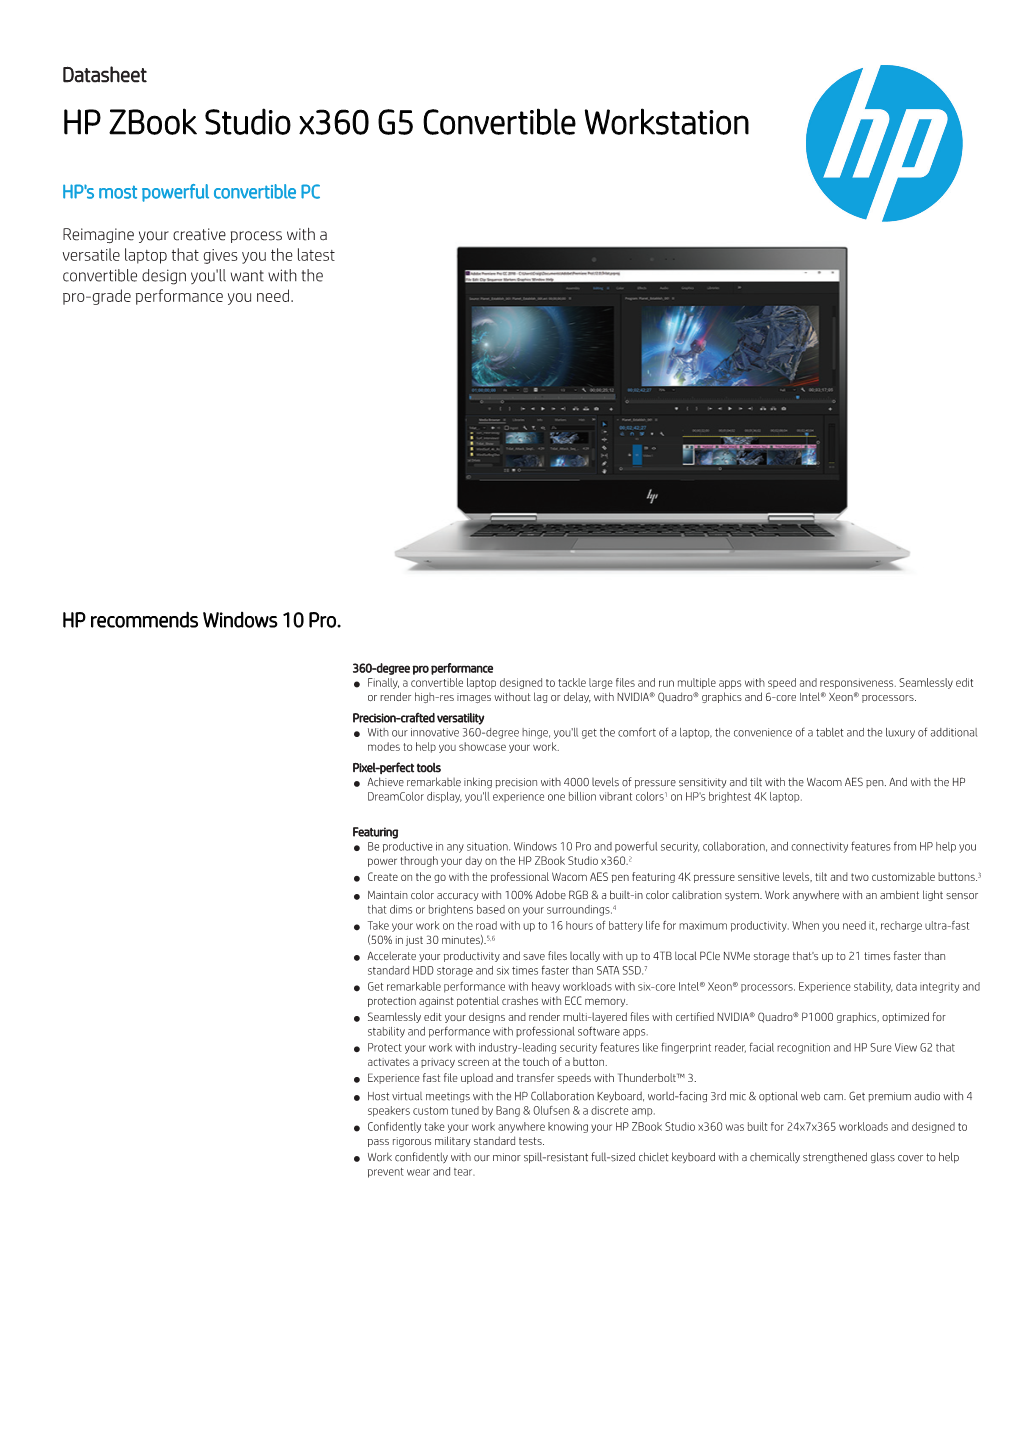 HP Zbook Studio X360 G5 Convertible Workstation